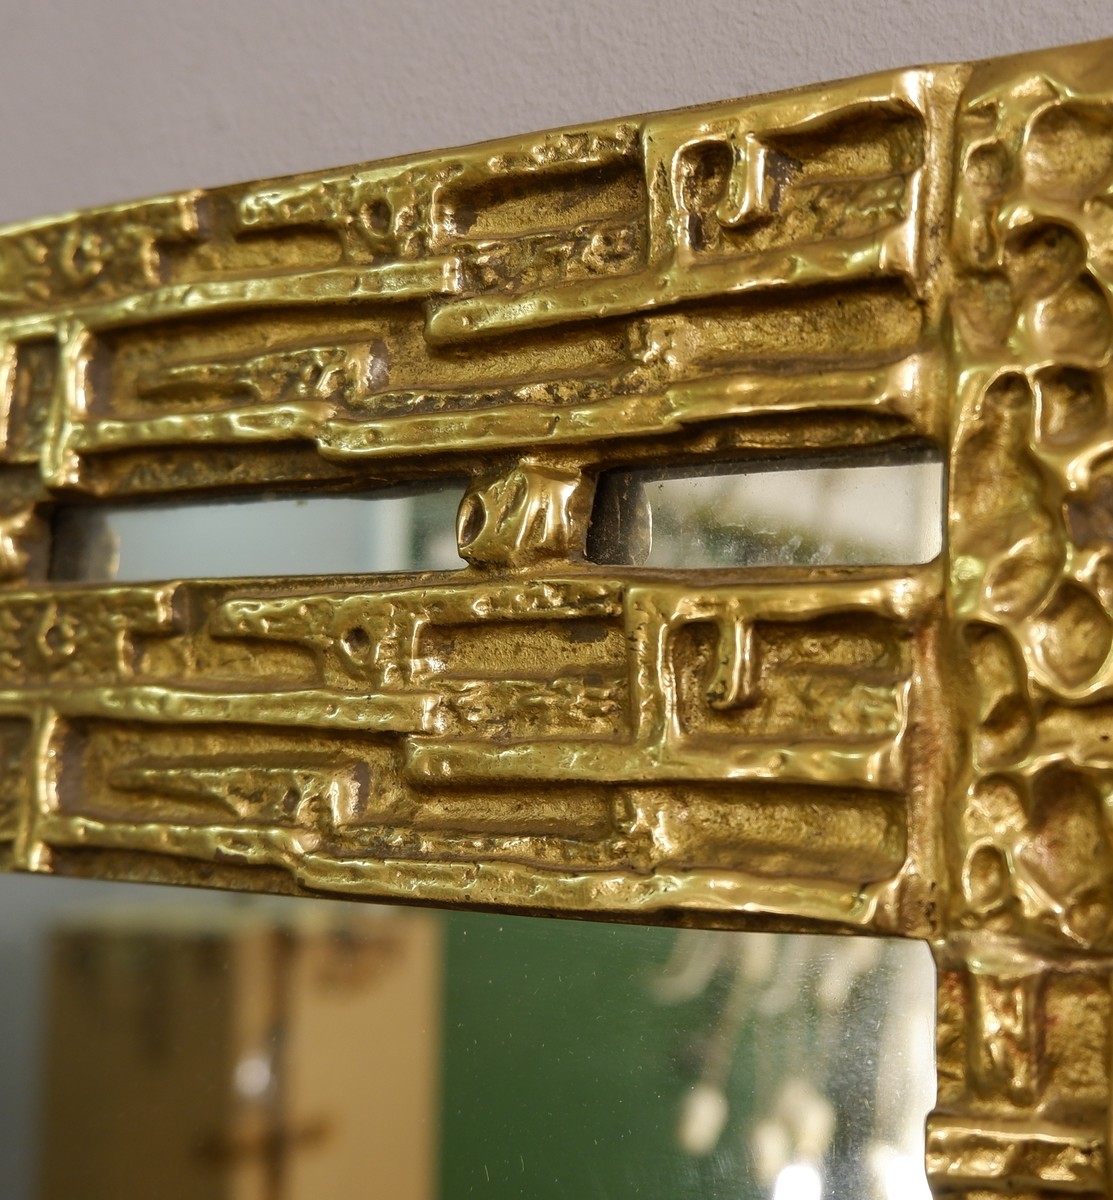 cast-brass-mirror-by-luciano-frigerio-it